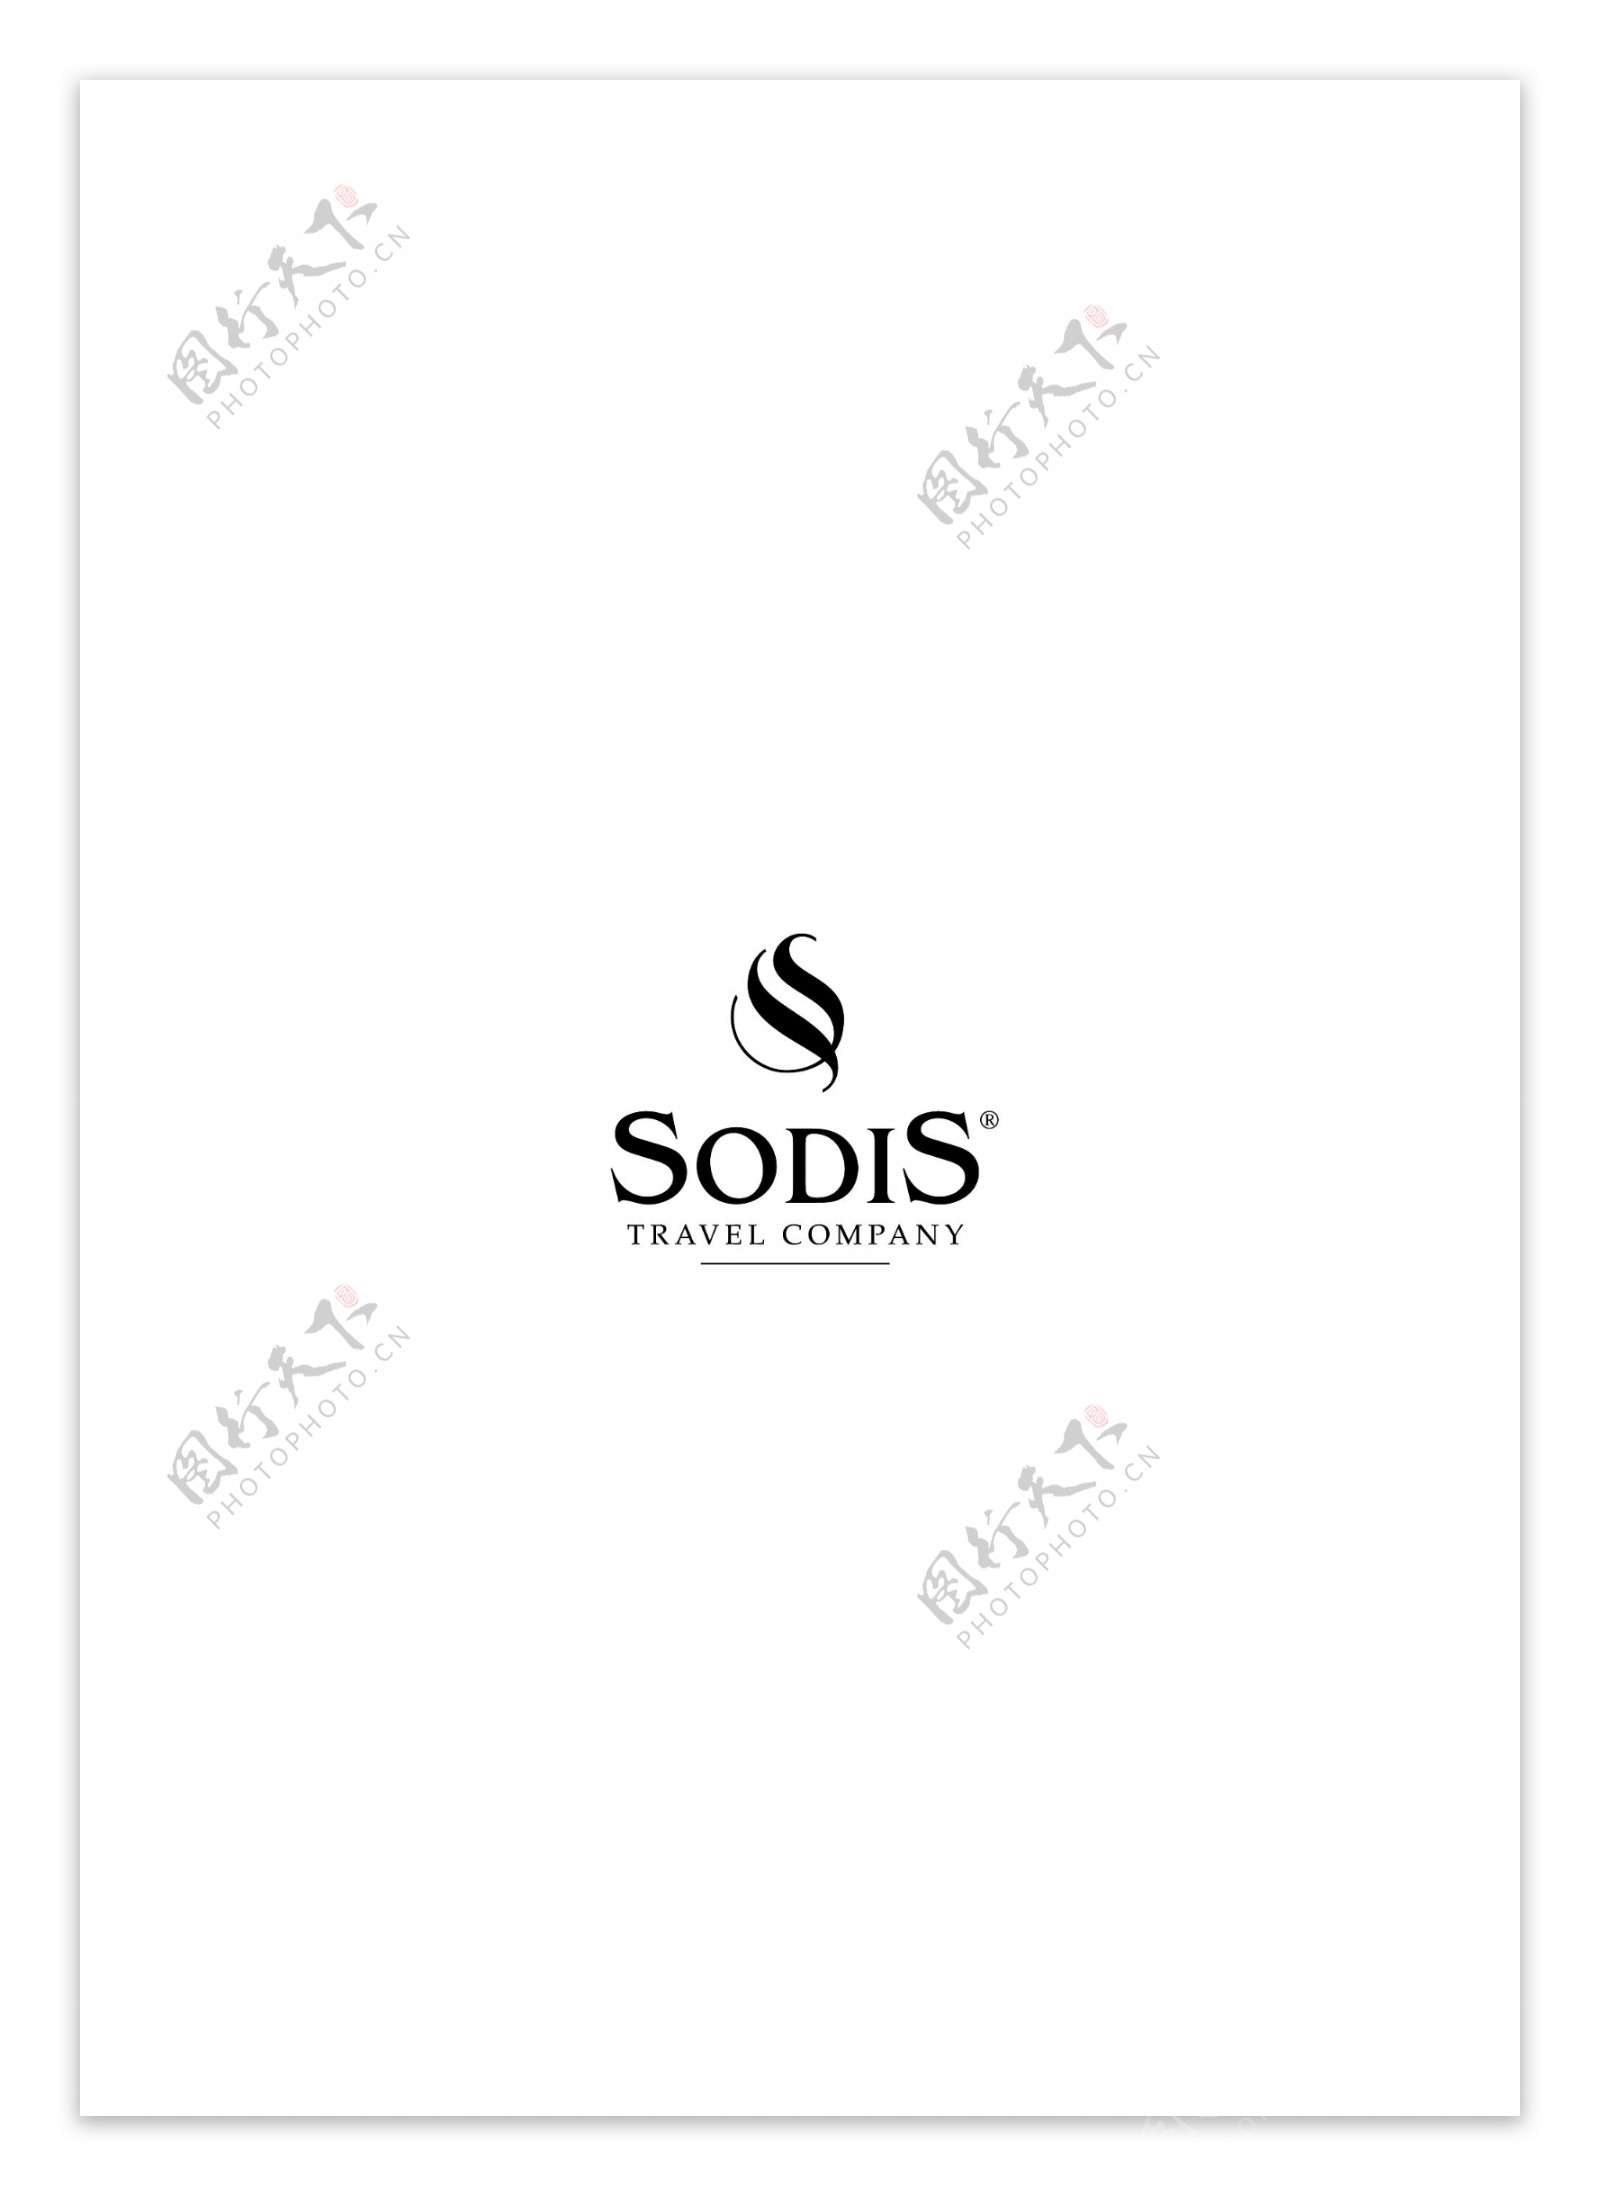 Sodislogo设计欣赏Sodis旅游网站LOGO下载标志设计欣赏